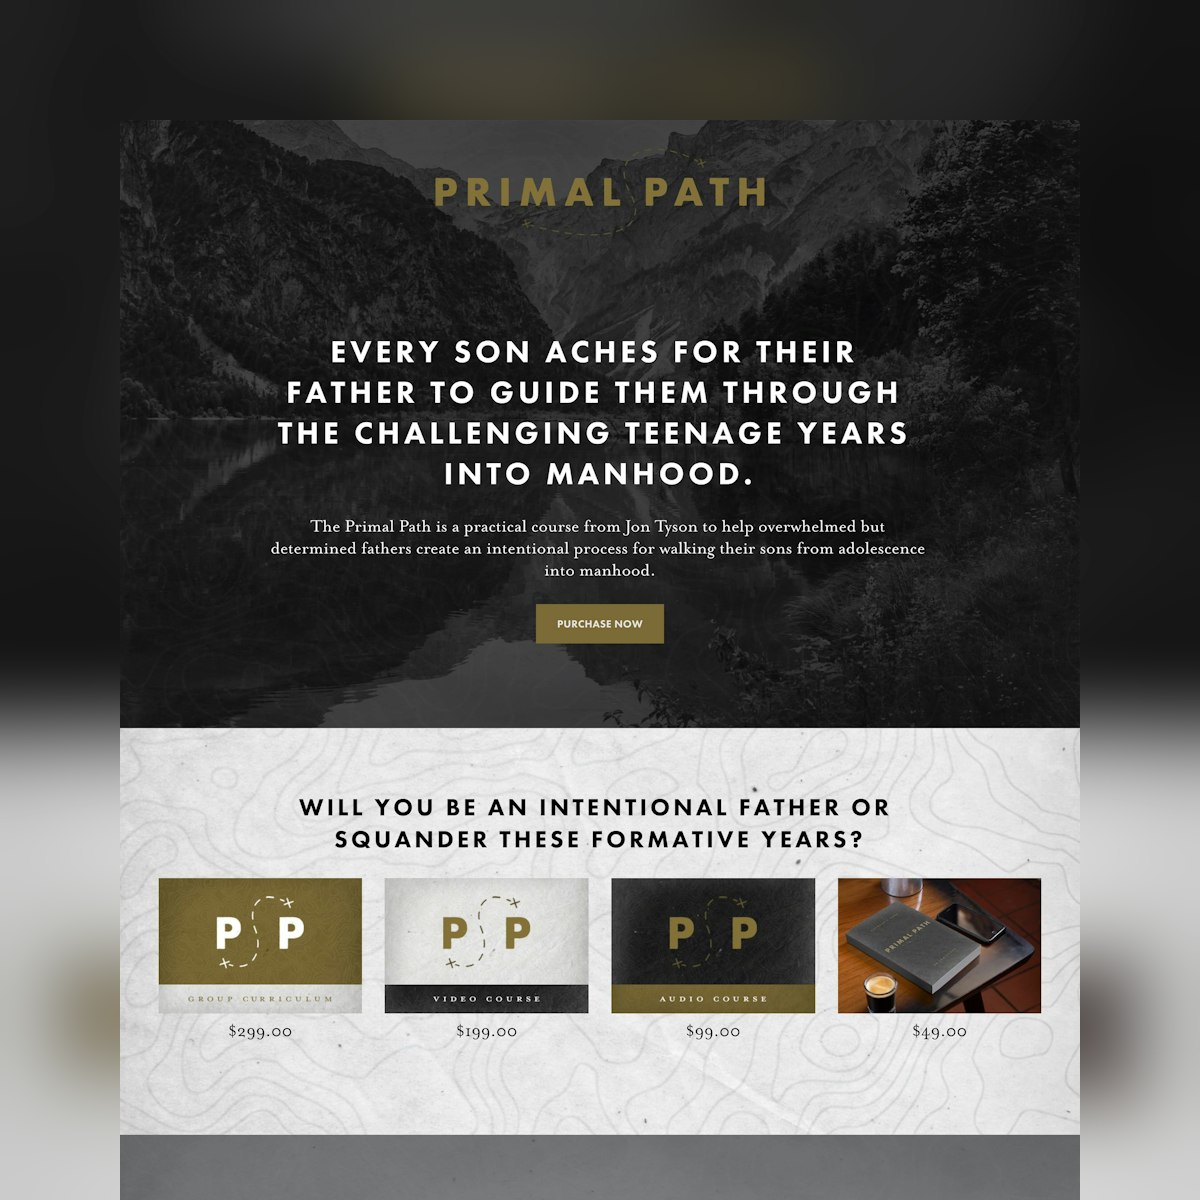 Product Page screen design idea #384: Website Inspiration: Primal Path